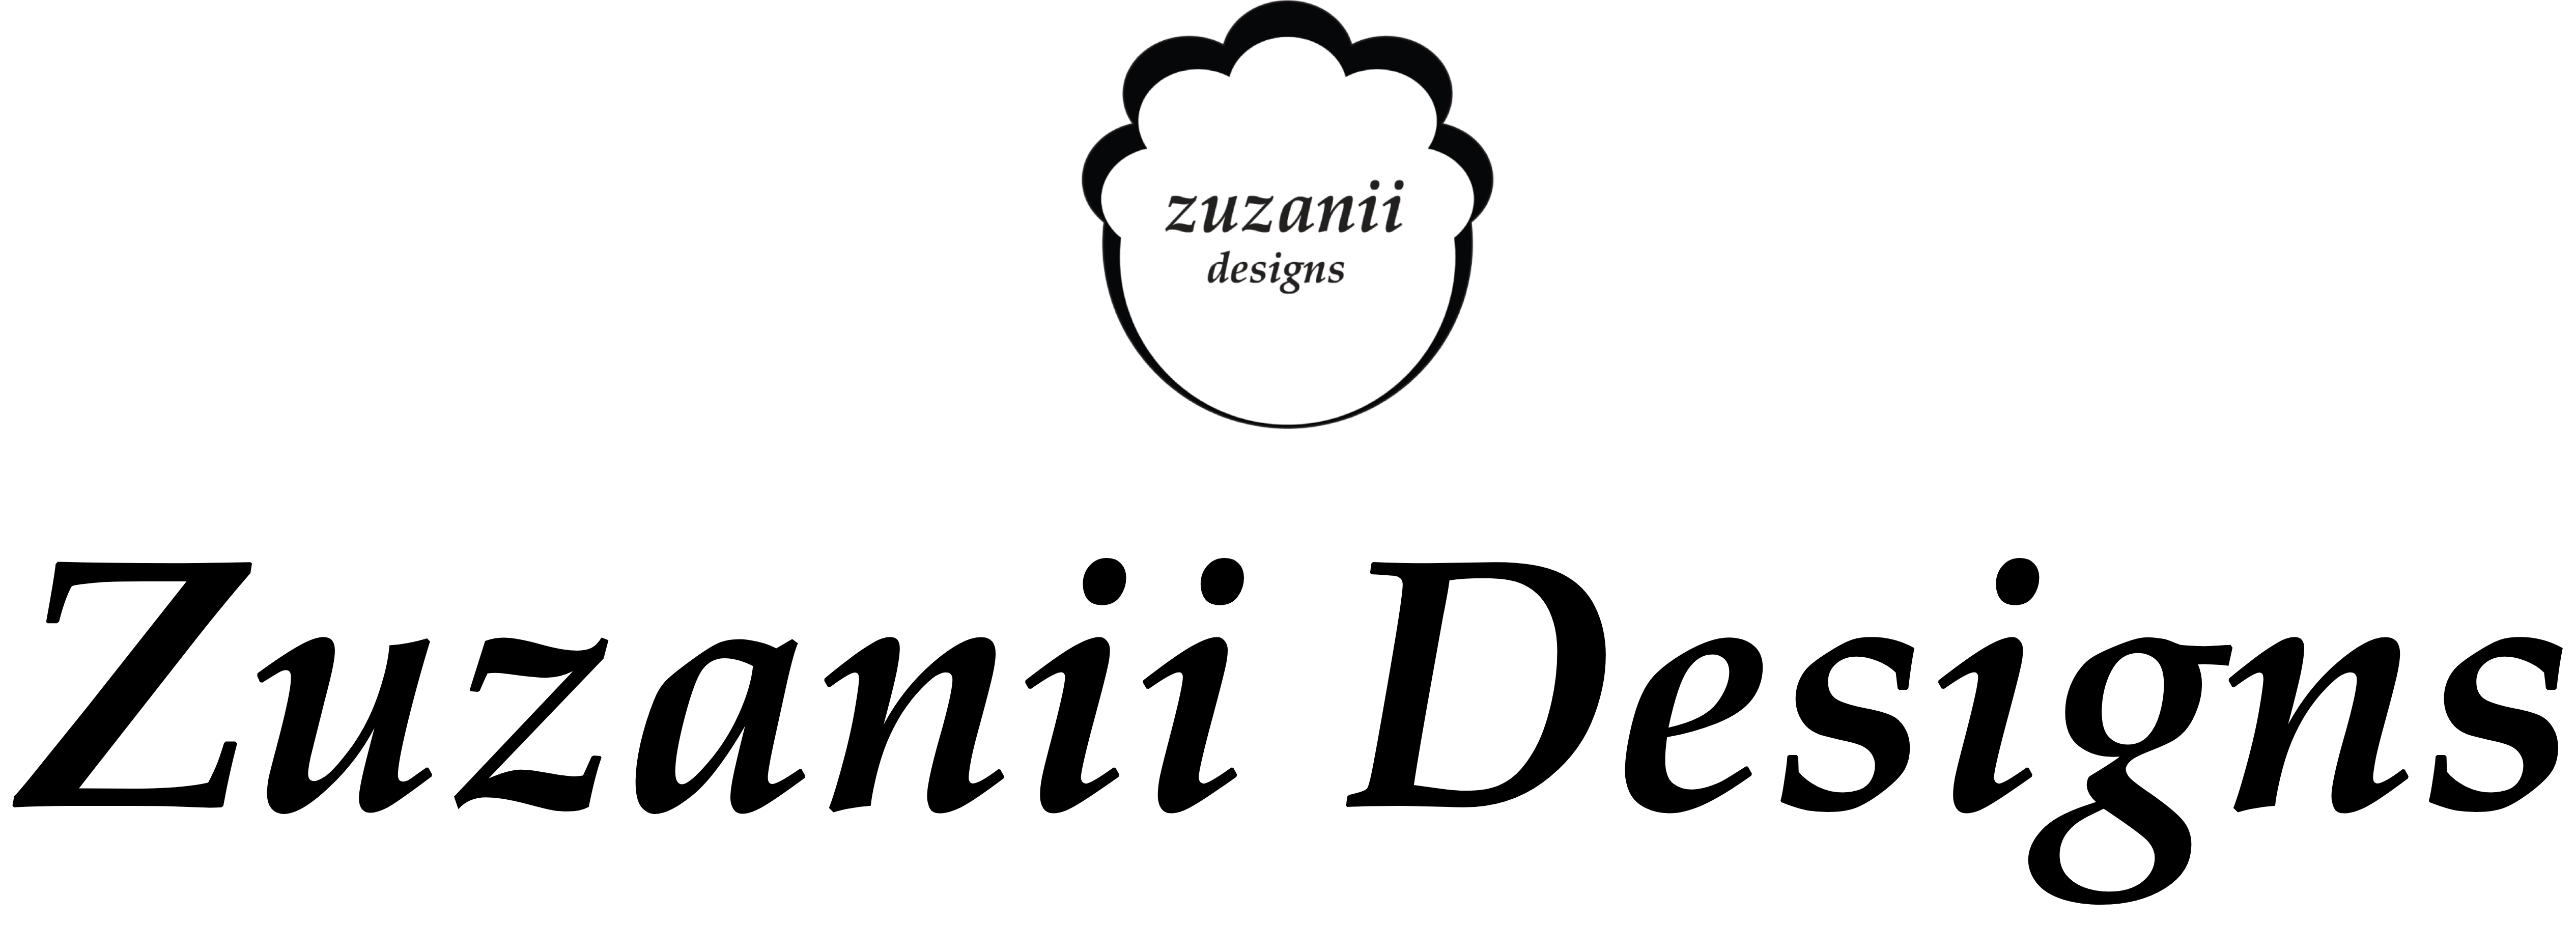 'Zuzanii Designs' logo. 'Zuzanii Designs'--one of my Digital Marketing clients--is a Sydney-based surface pattern designer known for floral designs.